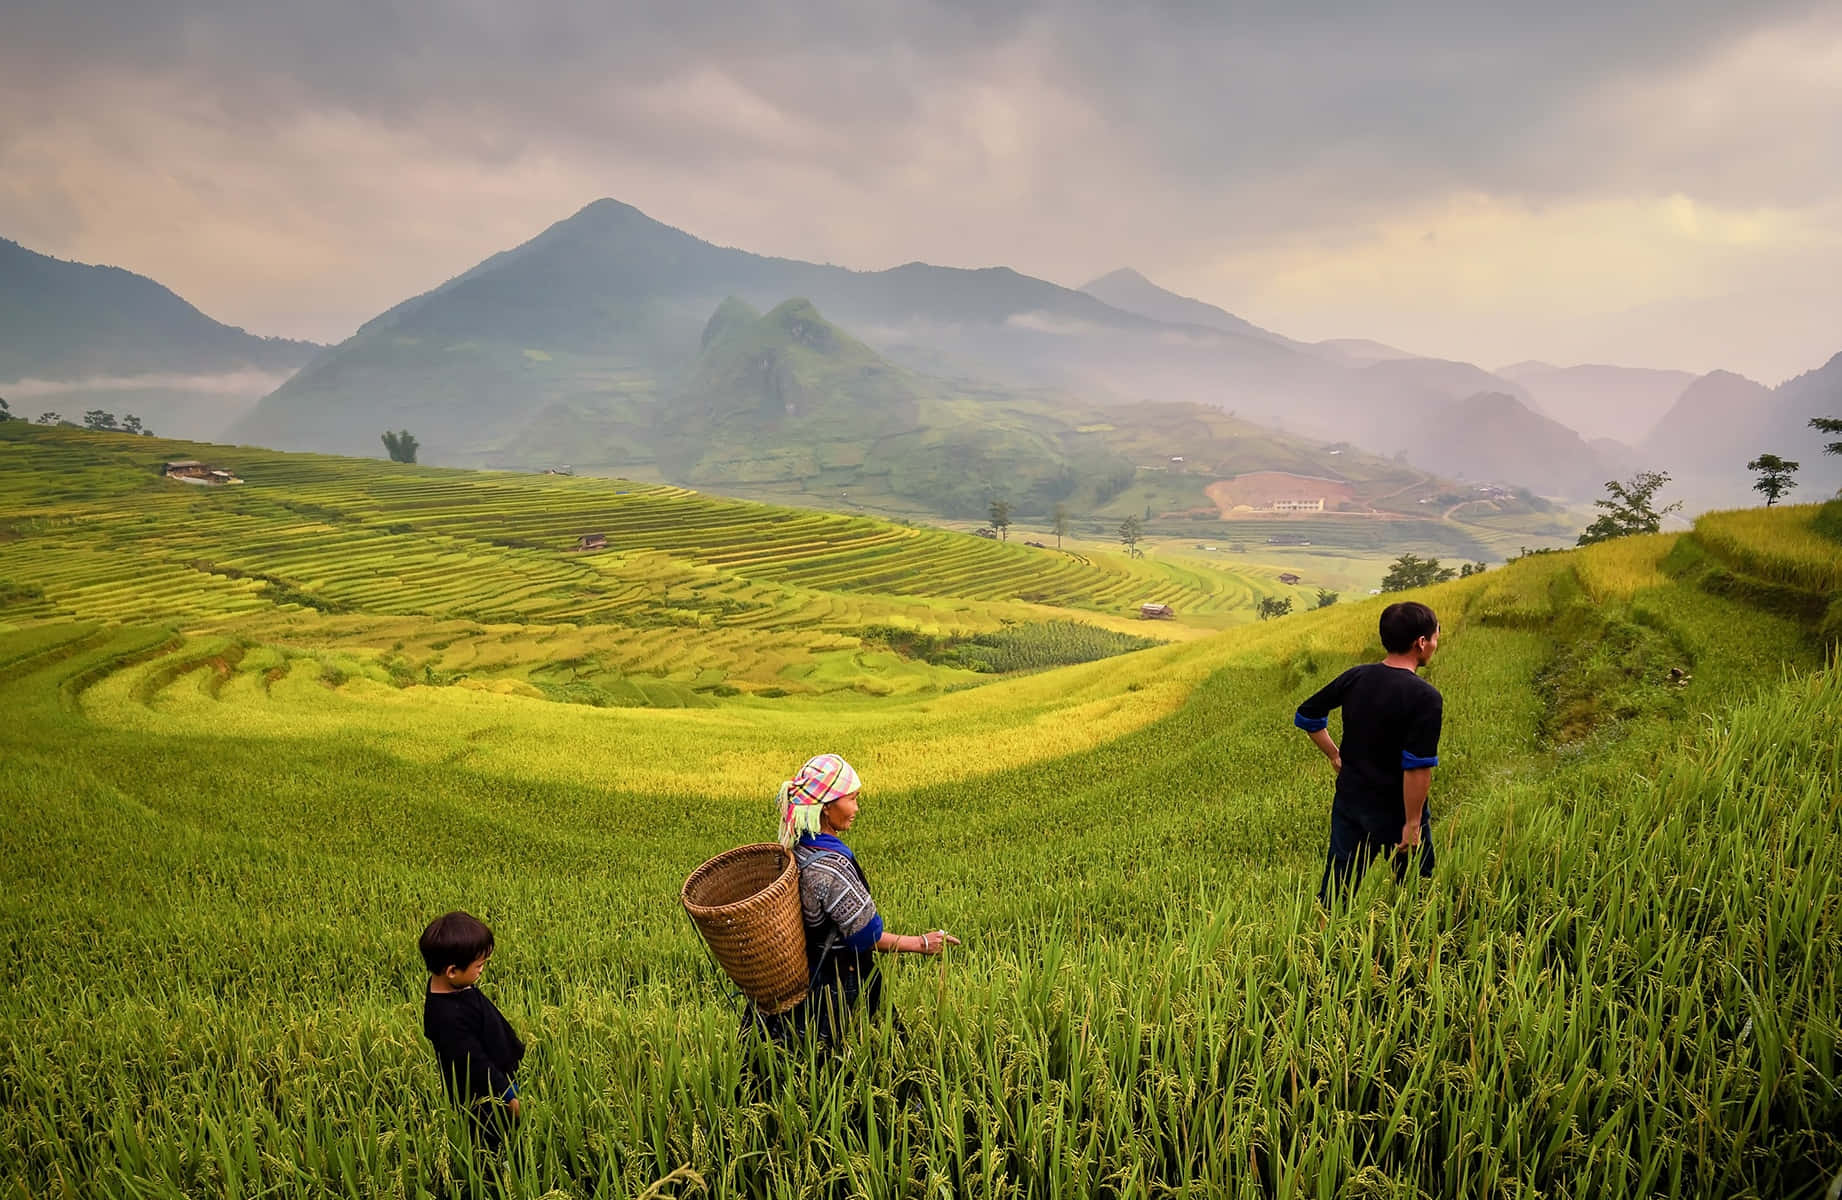 Serene Sunset Over Vietnam's Iconic Mountains